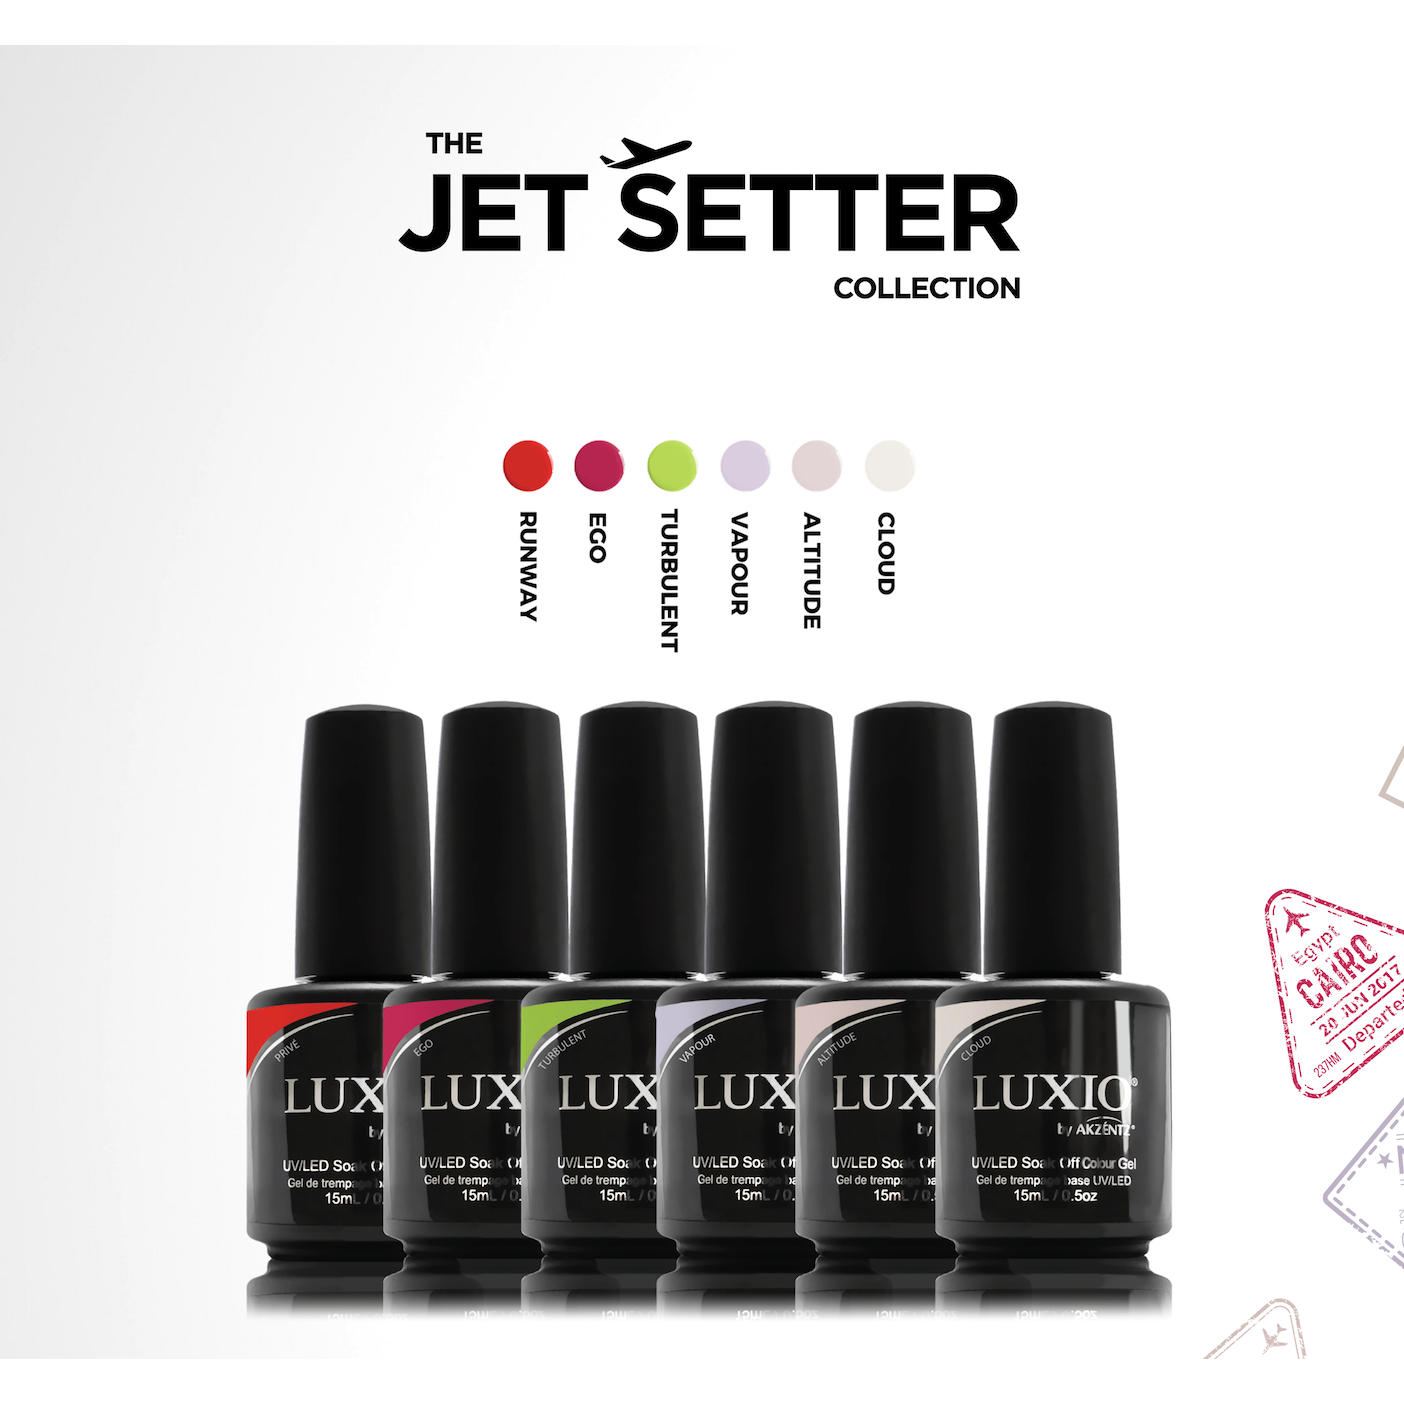 Luxio de tamaño completo - Colección Jet Setter